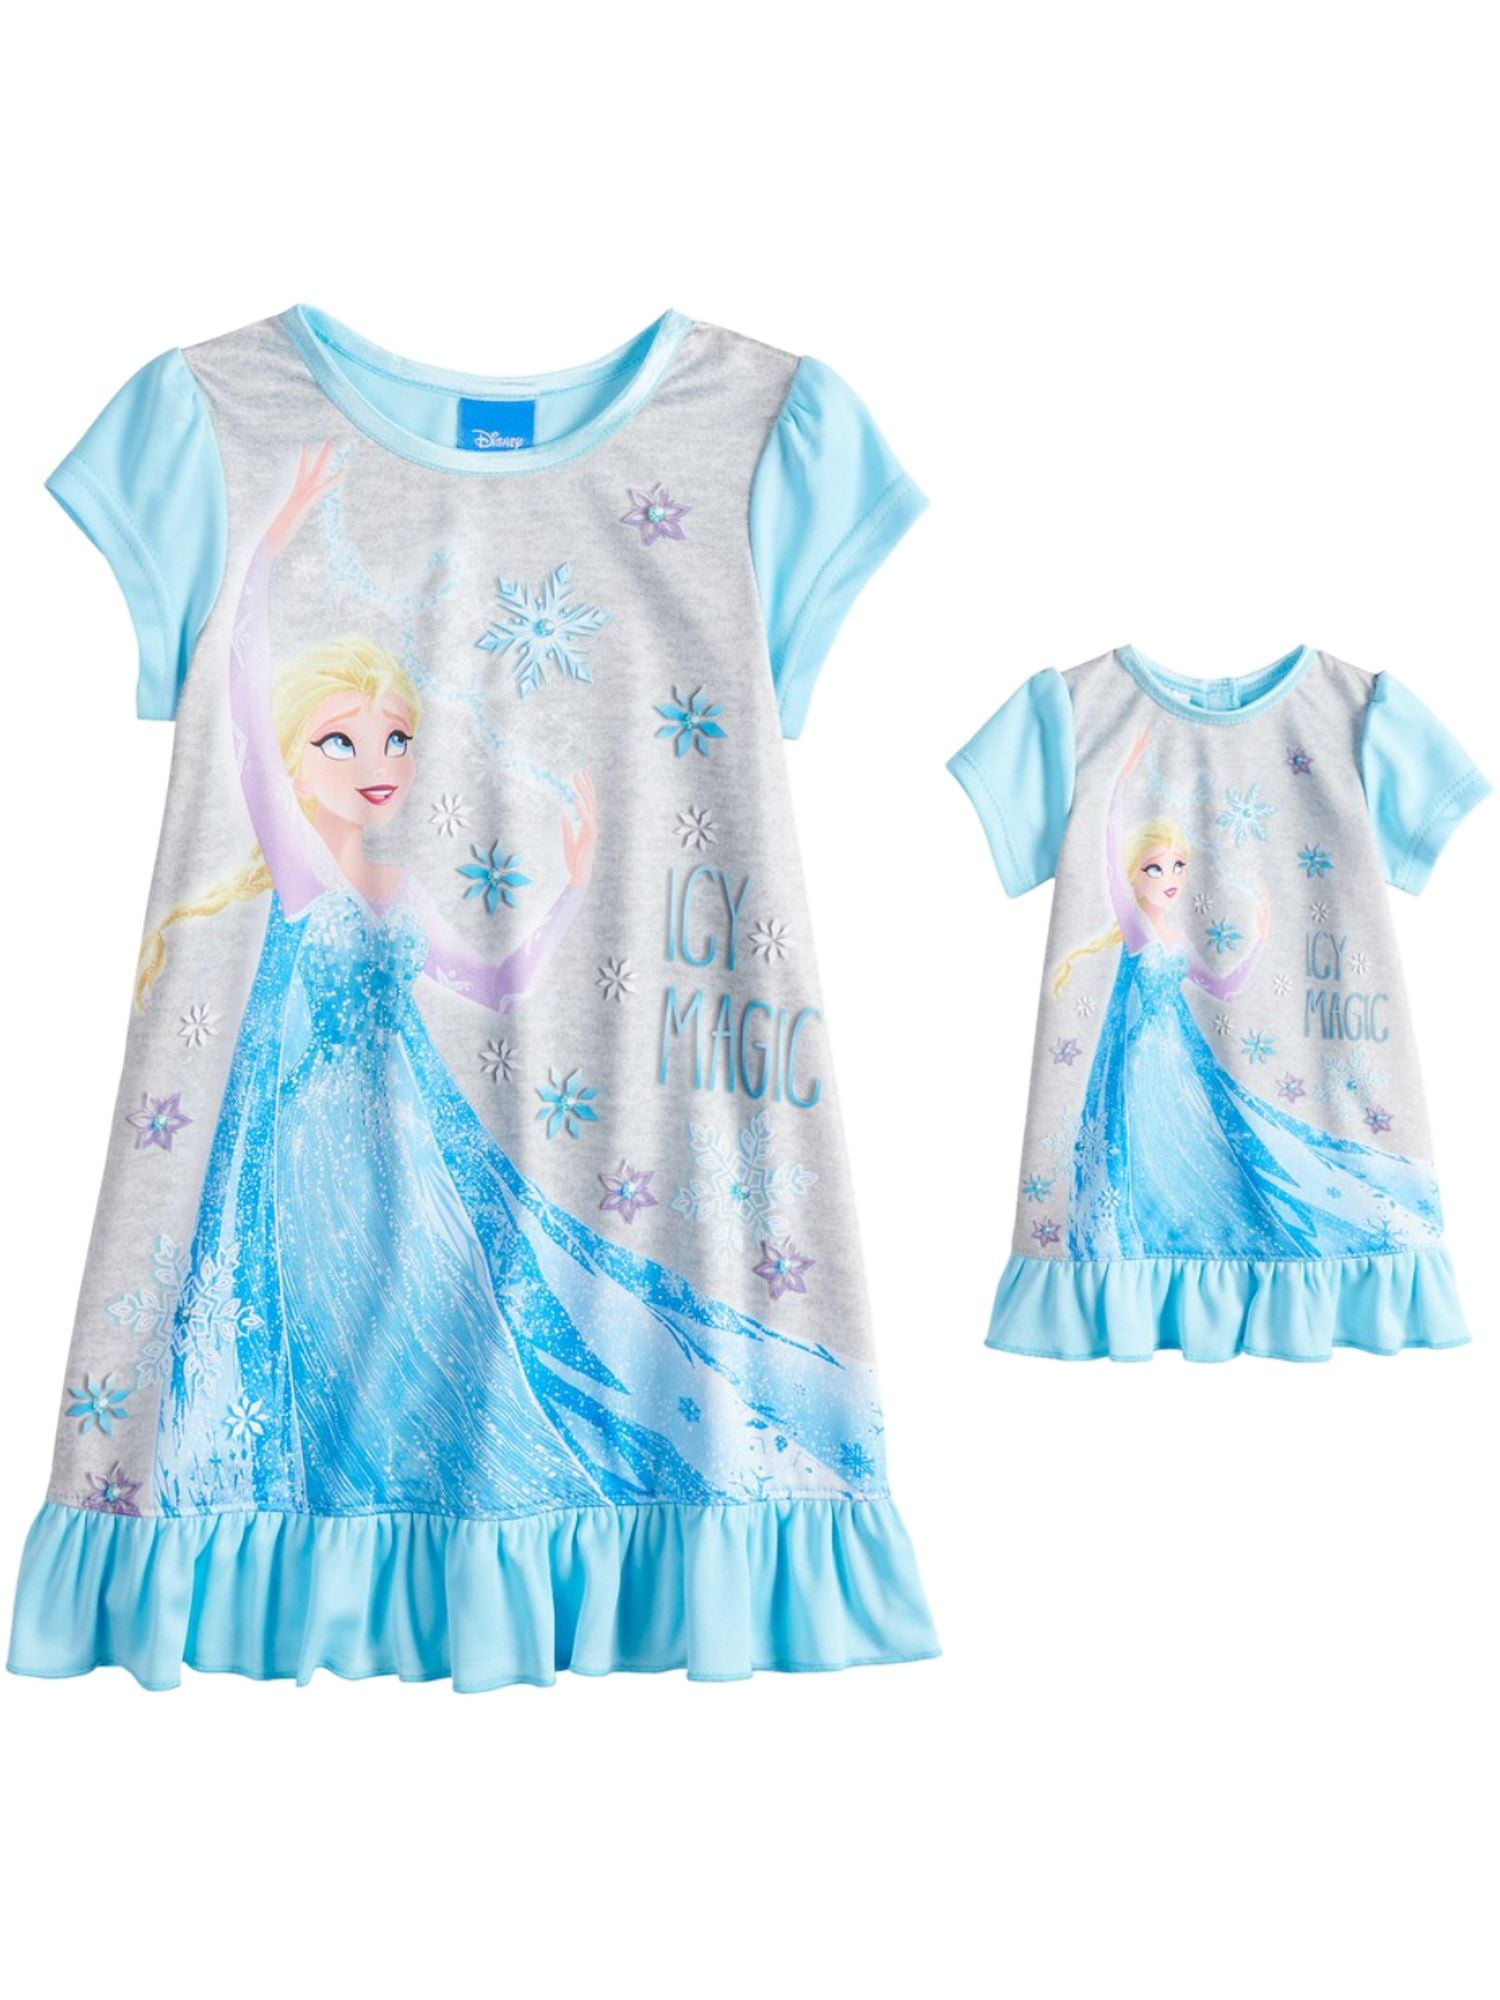 Frozen Elsa Nightgown Size 8 Medium Girls Matching Doll Gown 18 inch American